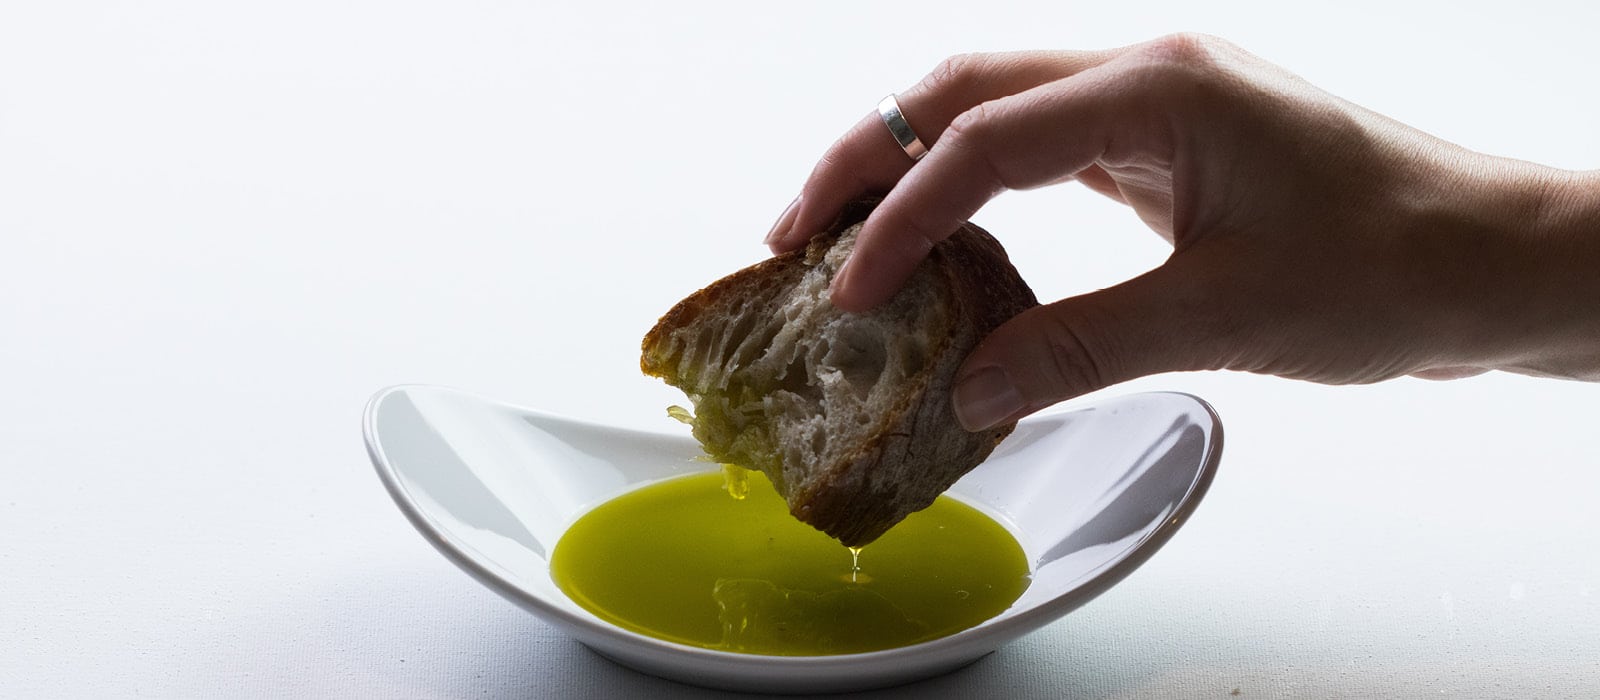 Isbilya Beneficios del aceite de oliva virgen extra